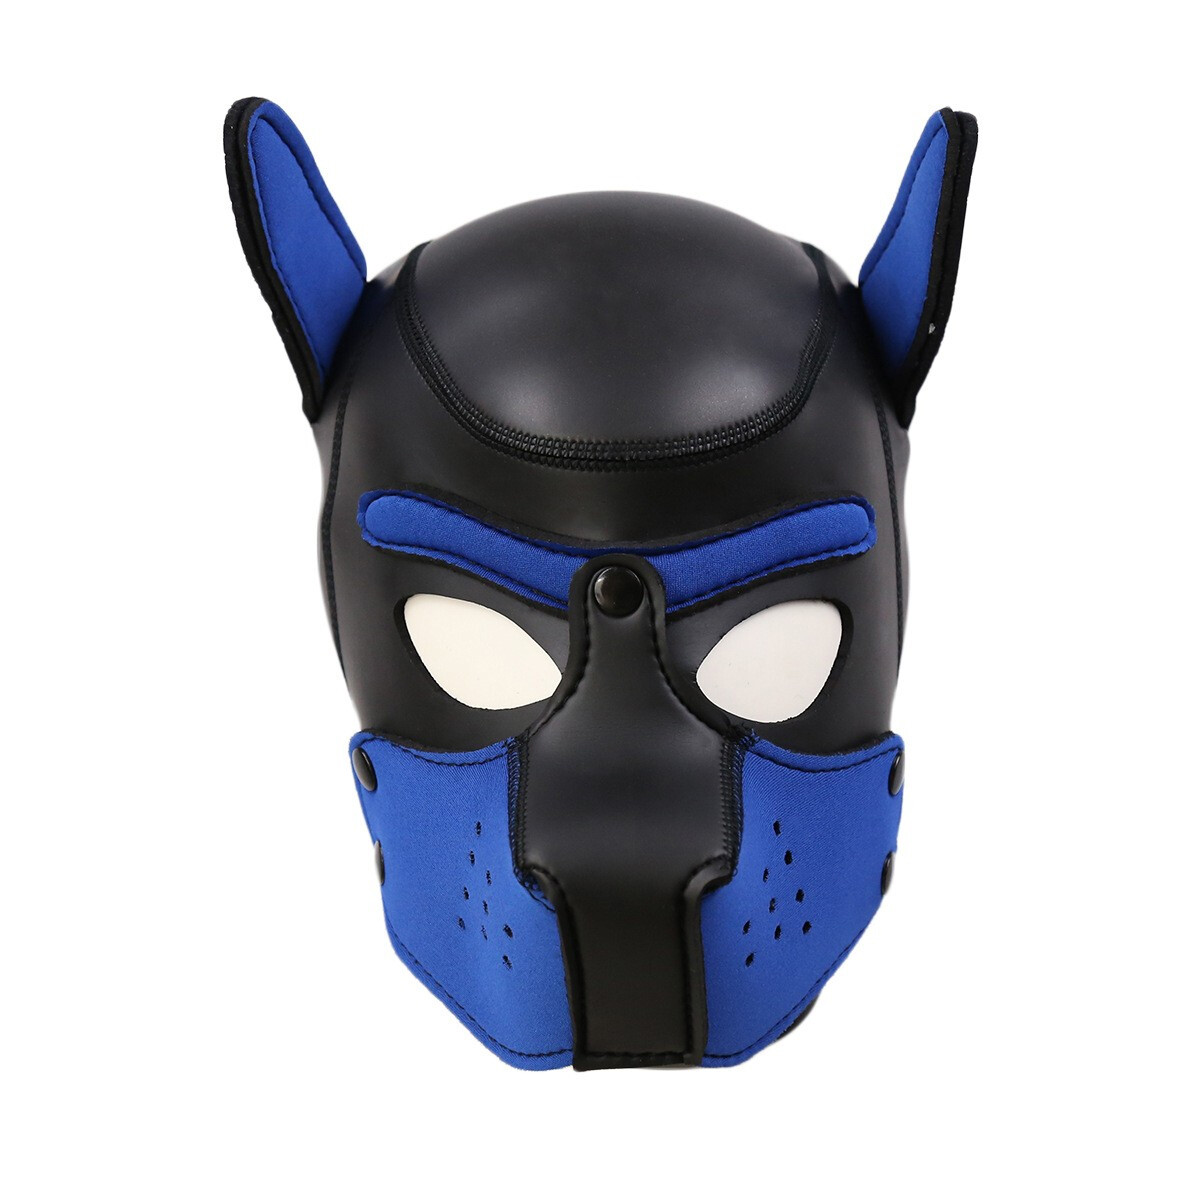 Mascara De Perro Con Hocico Desmontable - Azul 